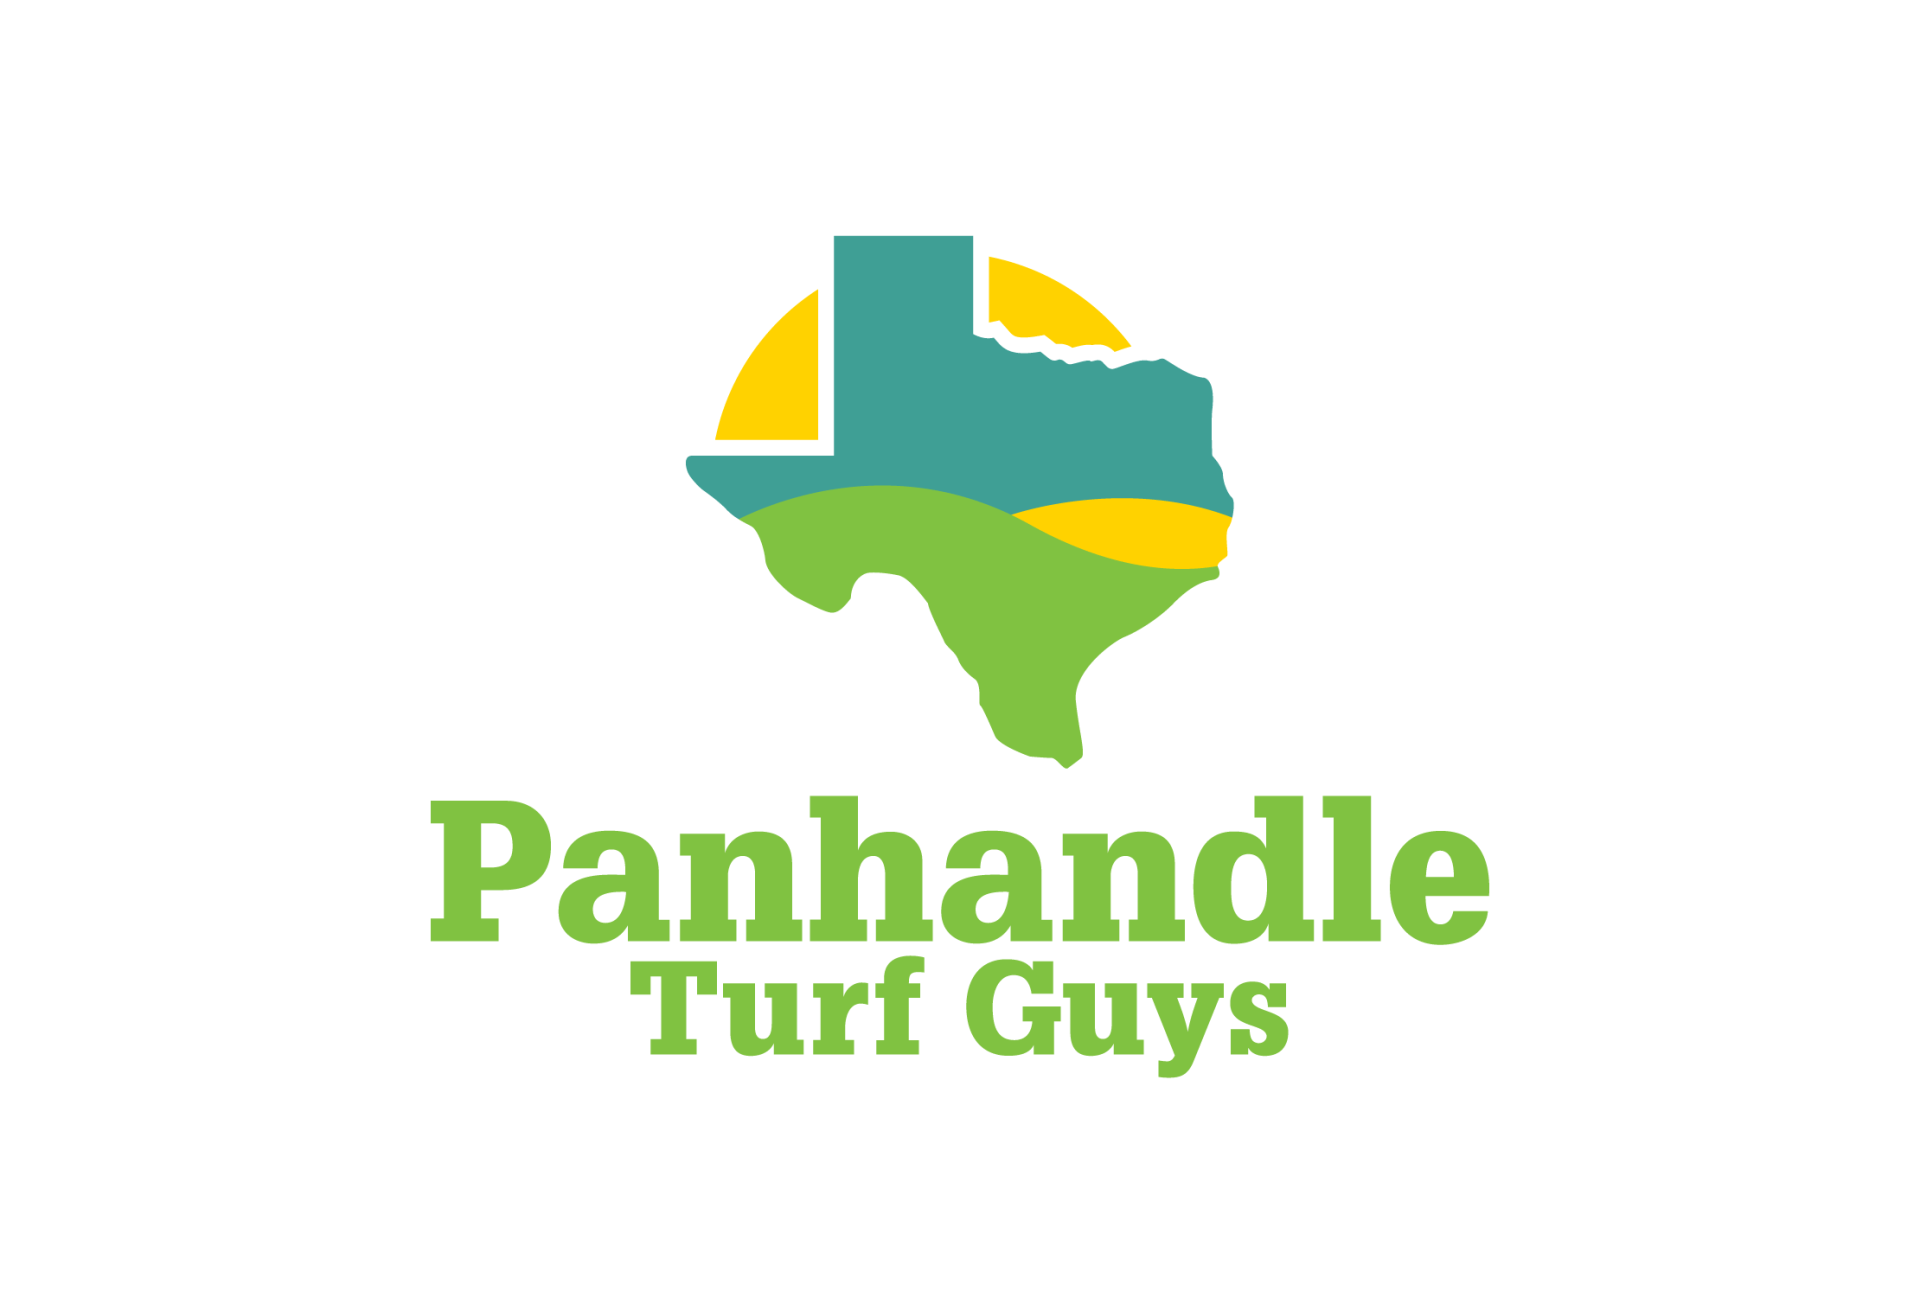 Panhandle Turf Guys logo designed by C&B Marketing.